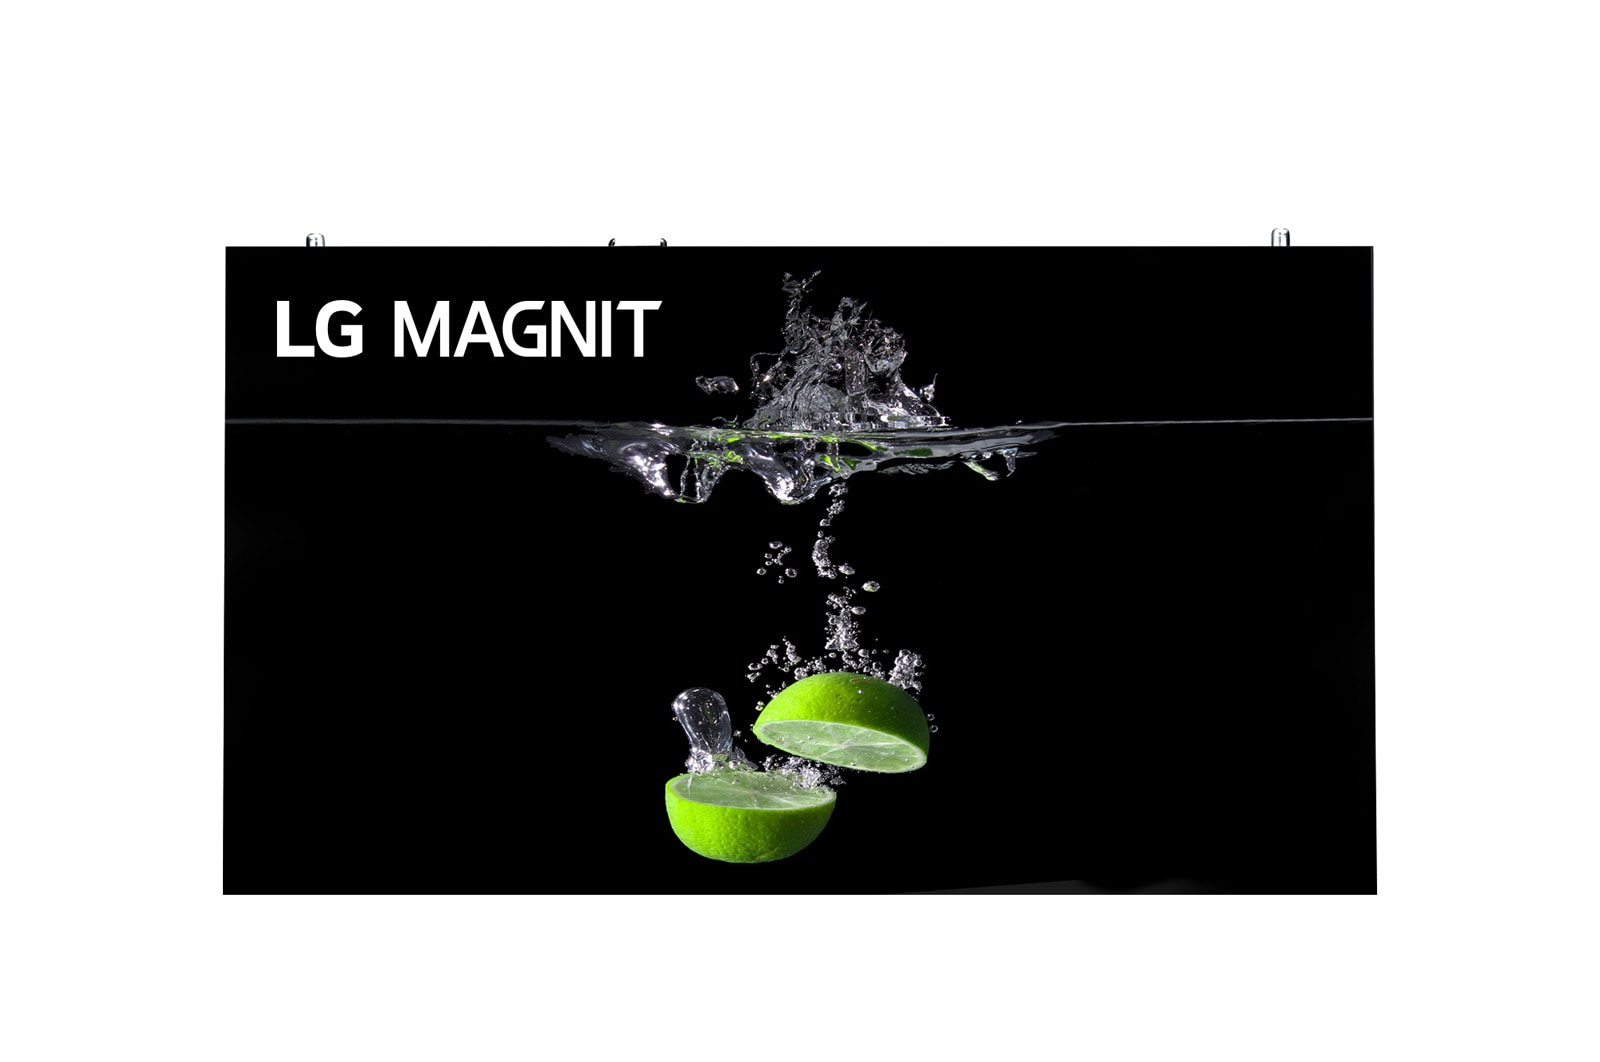 LG MAGNIT, LSAB012